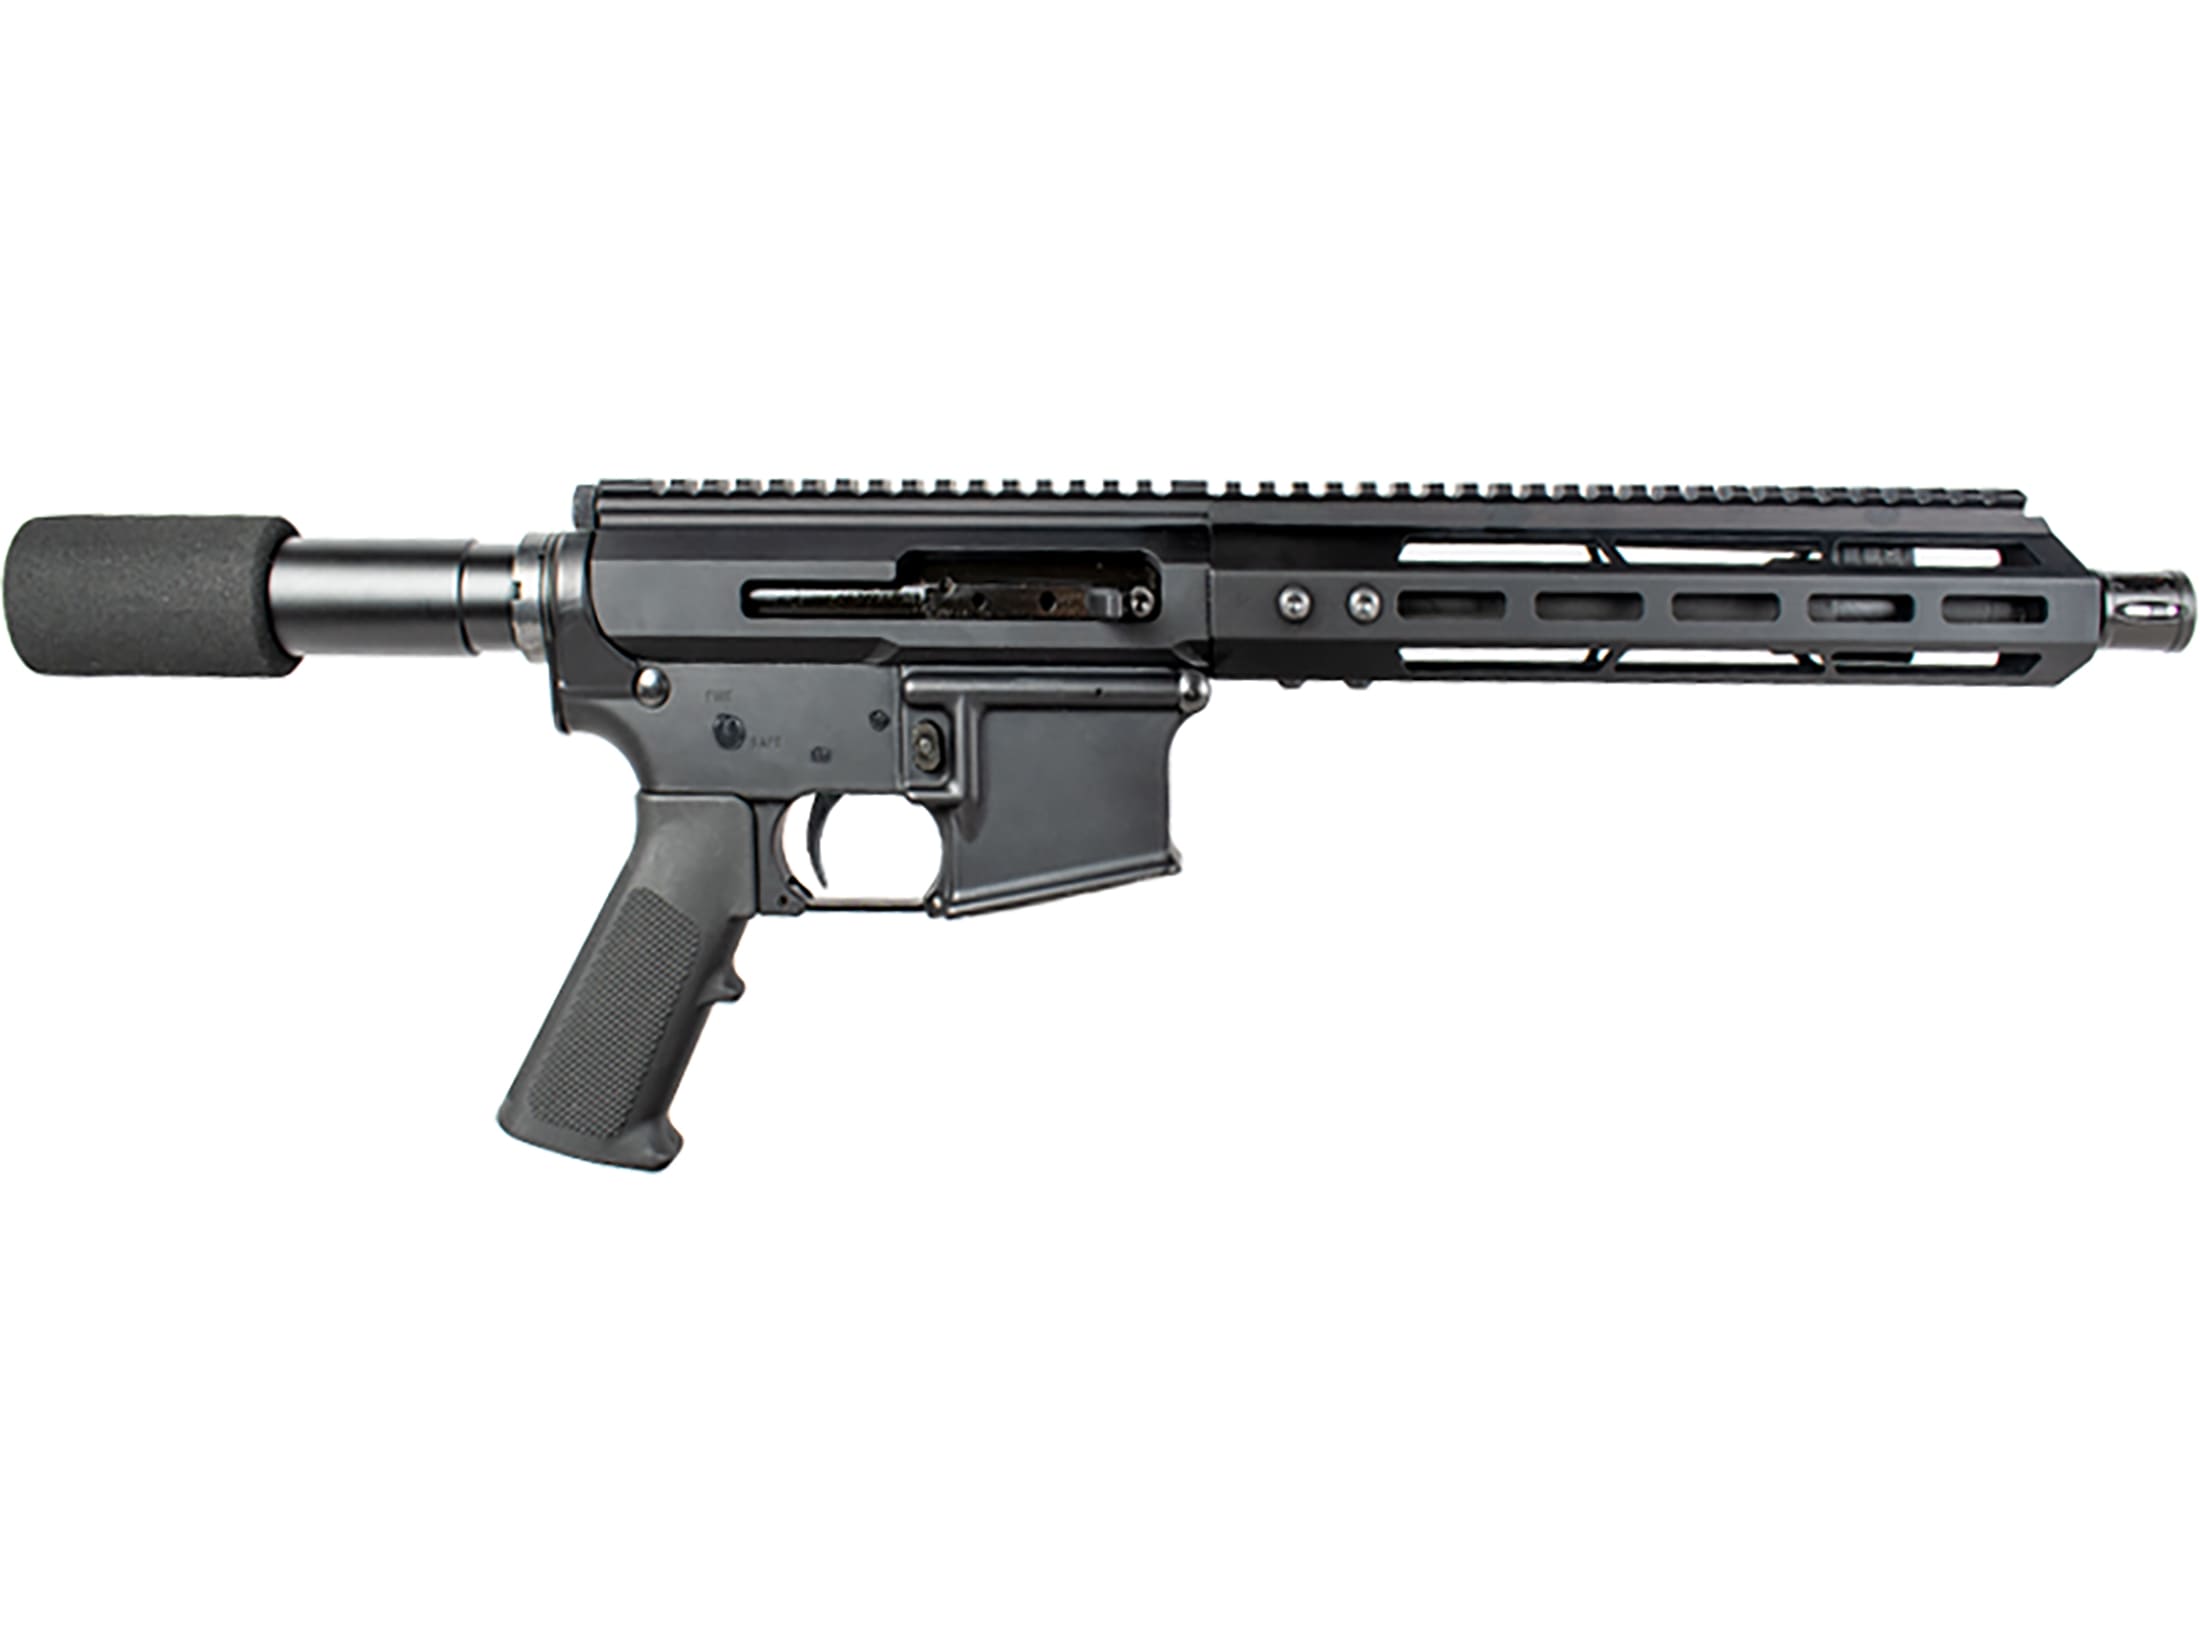 248957 - Bear Creek Arsenal AR-15 Side Charging Semi-Automatic Centerfire Pistol